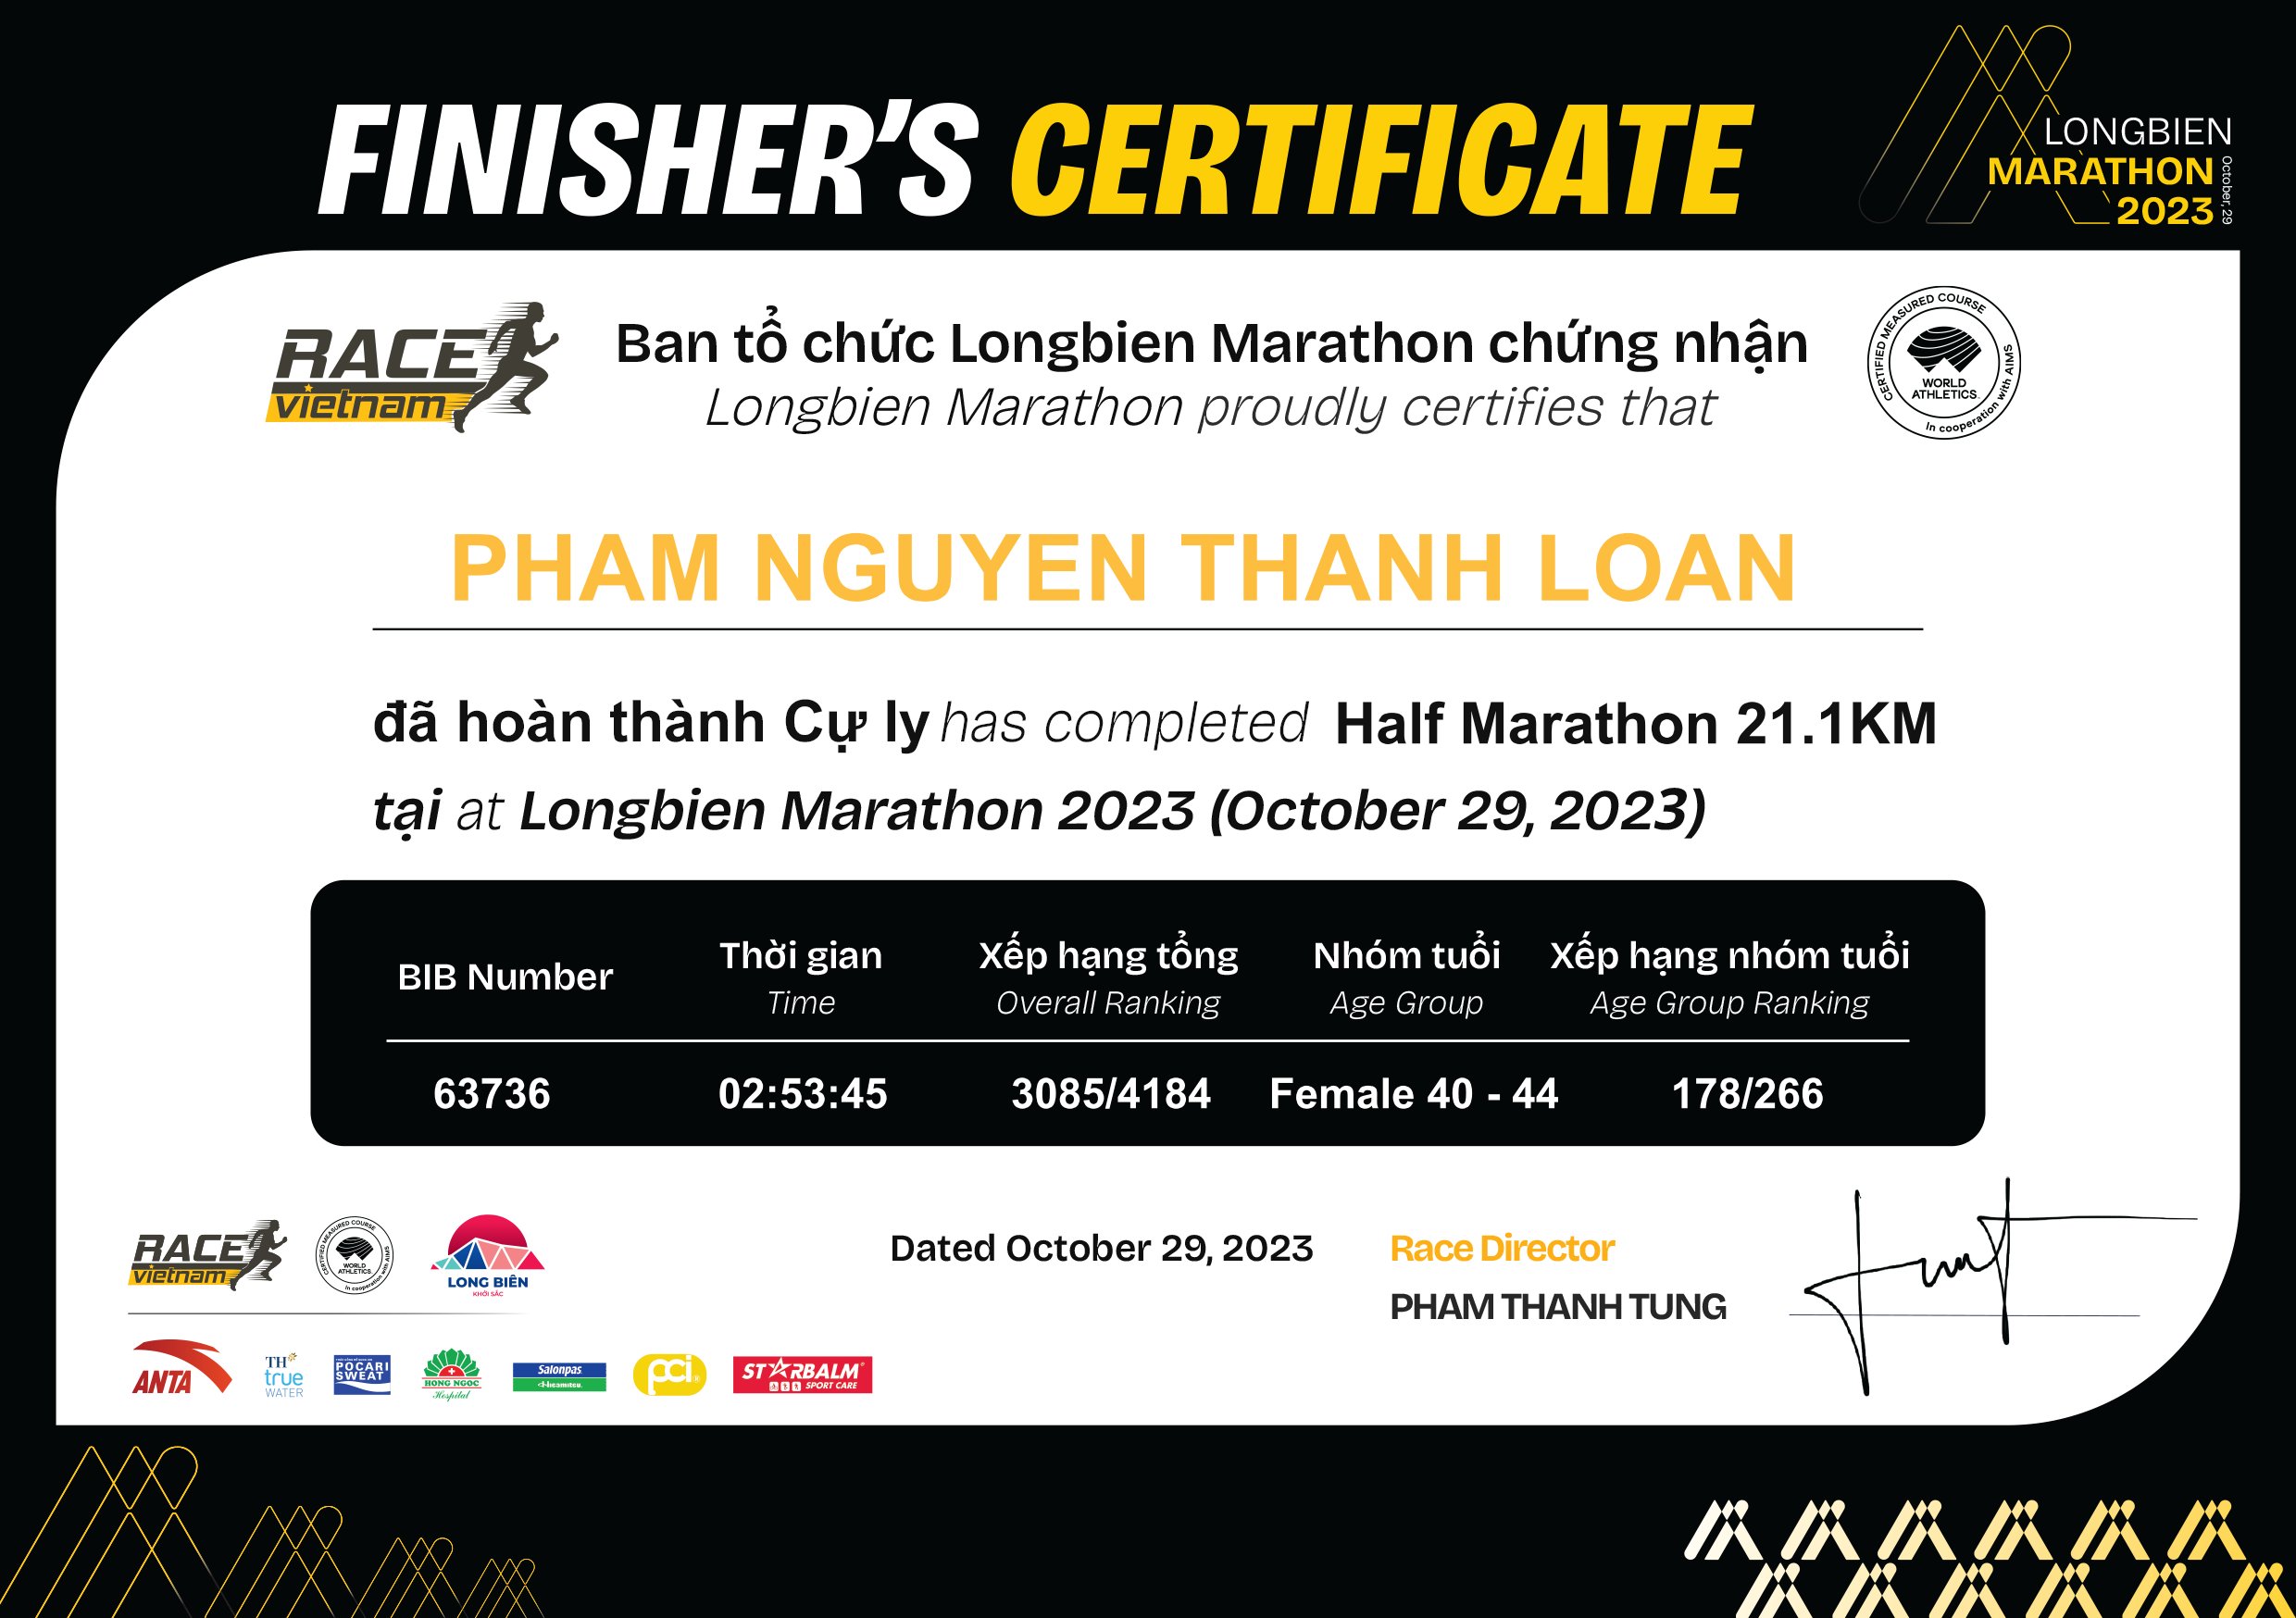 63736 - Pham Nguyen Thanh Loan